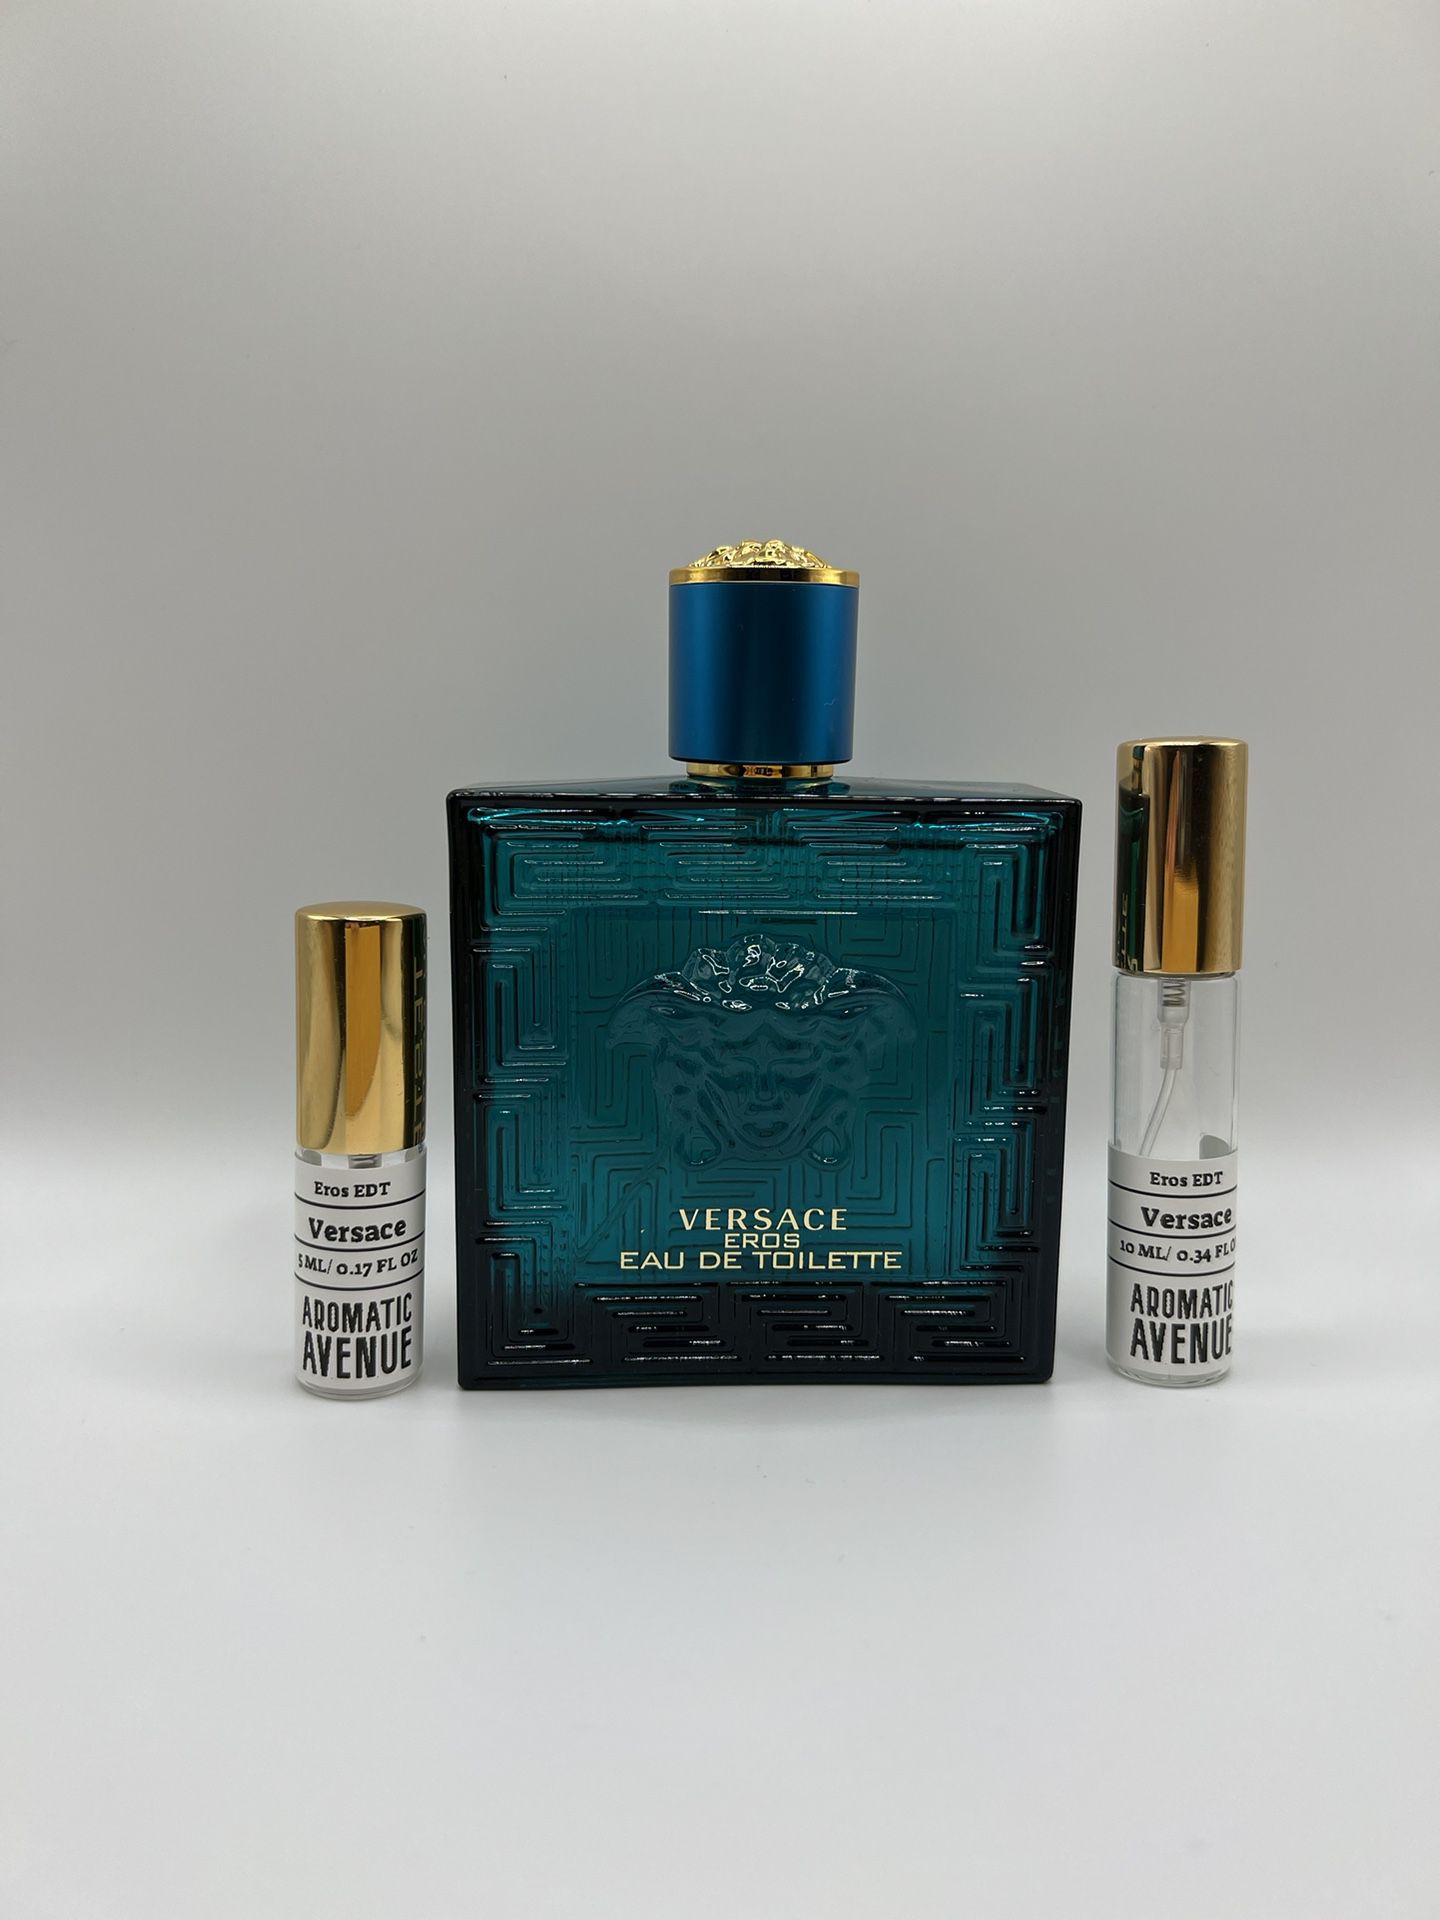 Versace Eros EDT Fragrance Glass Decant Sample Spray Travel Size Vial 10ML